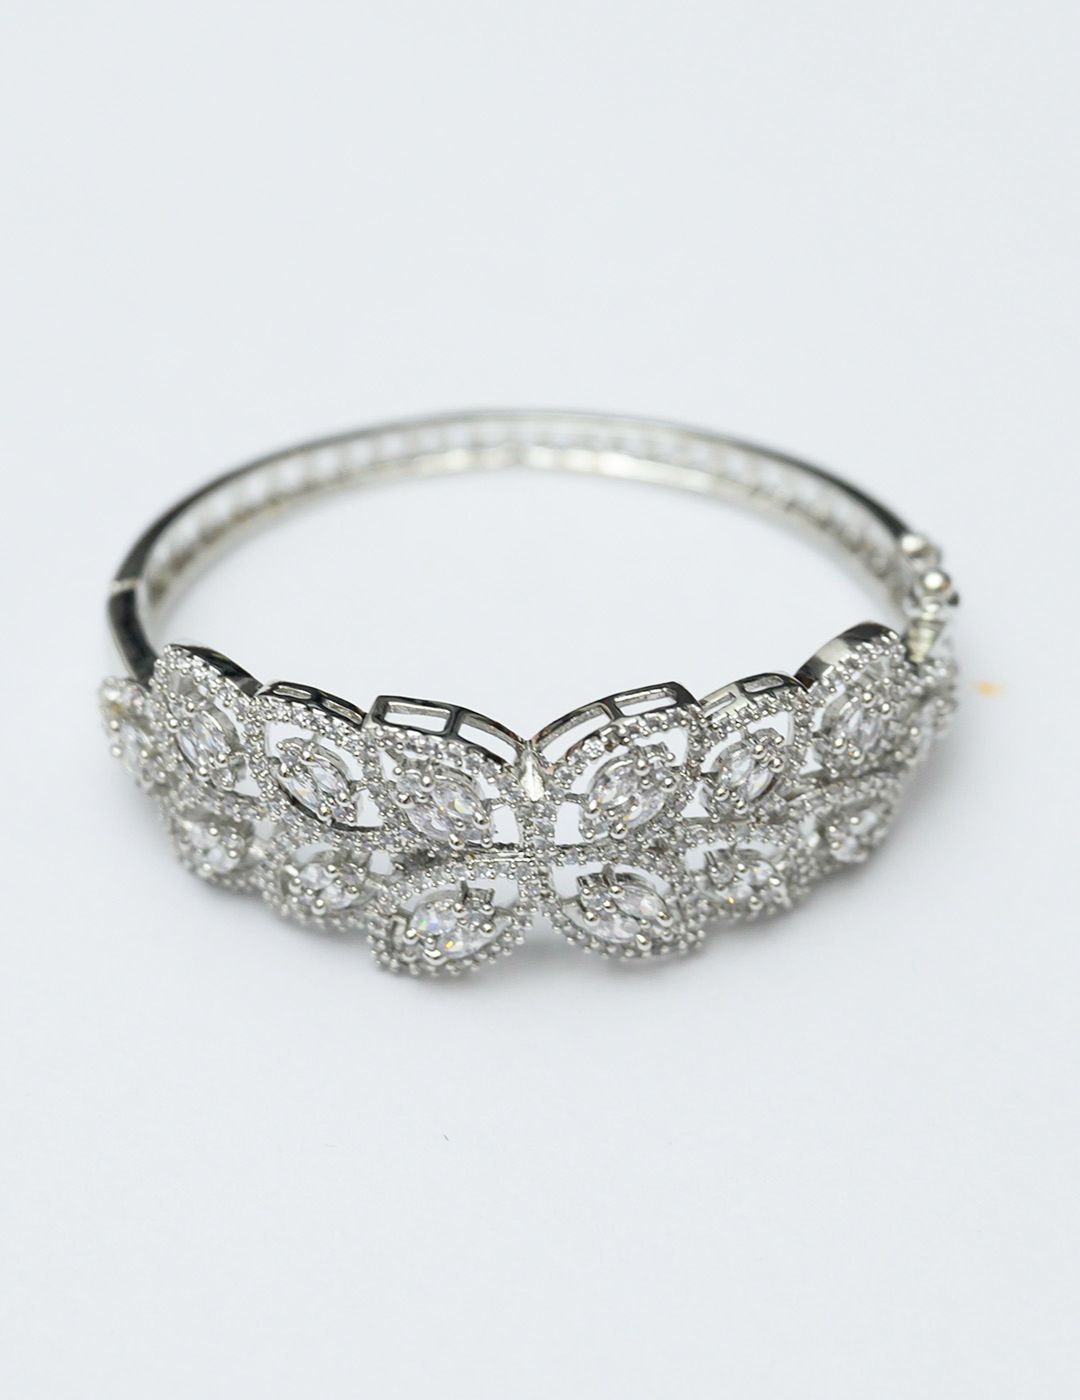 Jinders Diamond Fashion Bracelets.